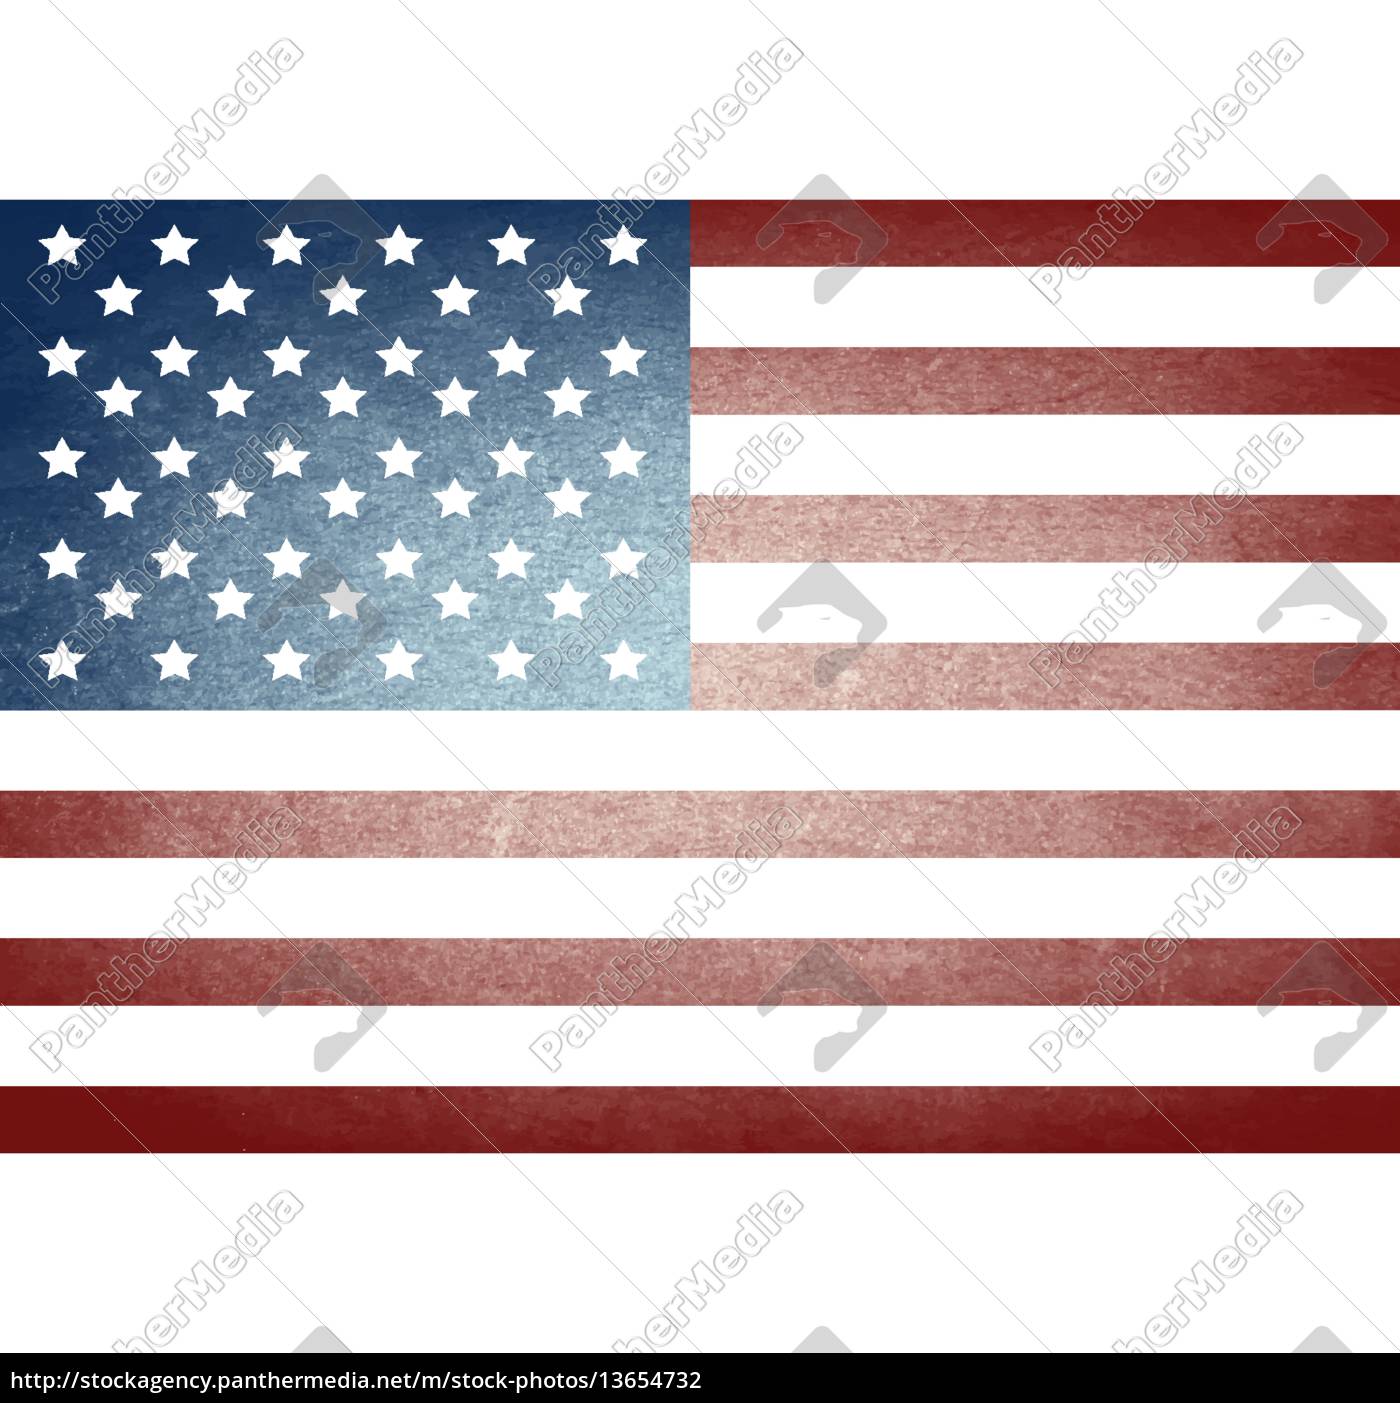 Download Grunge American Flag Royalty Free Photo 13654732 Panthermedia Stock Agency